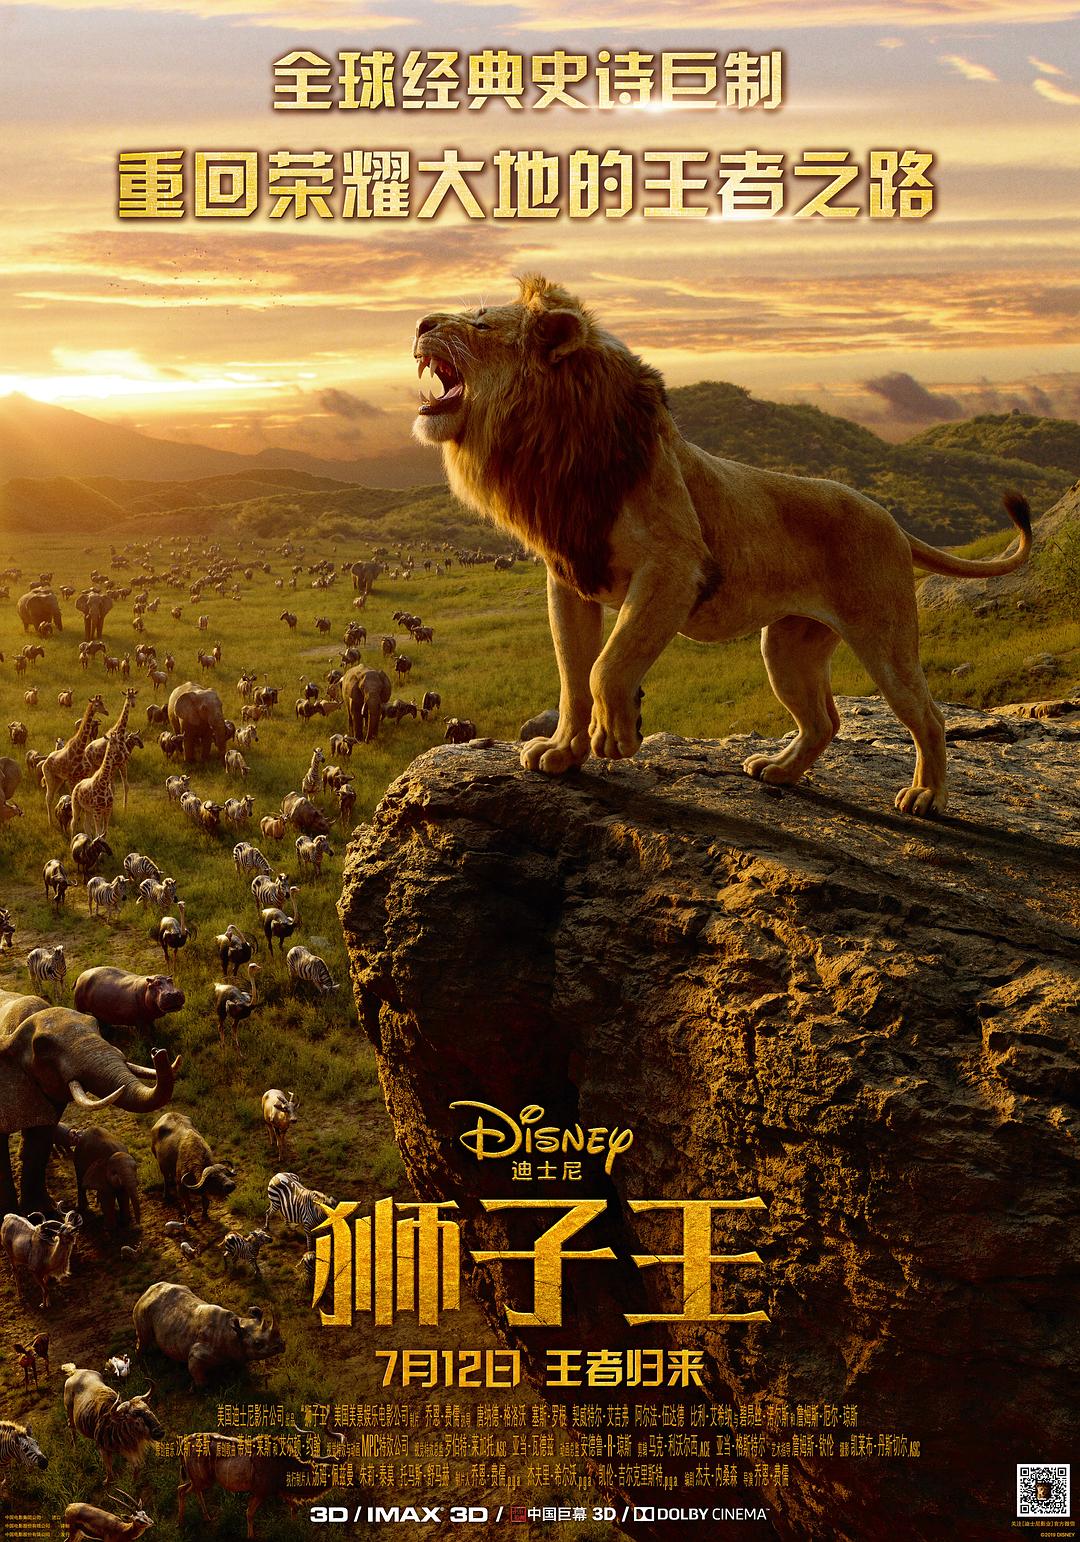 狮子王/狮子王真人版 The.Lion.King.2019.3D.1080p.BluRay.x264-GUACAMOLE 9.84GB-1.png